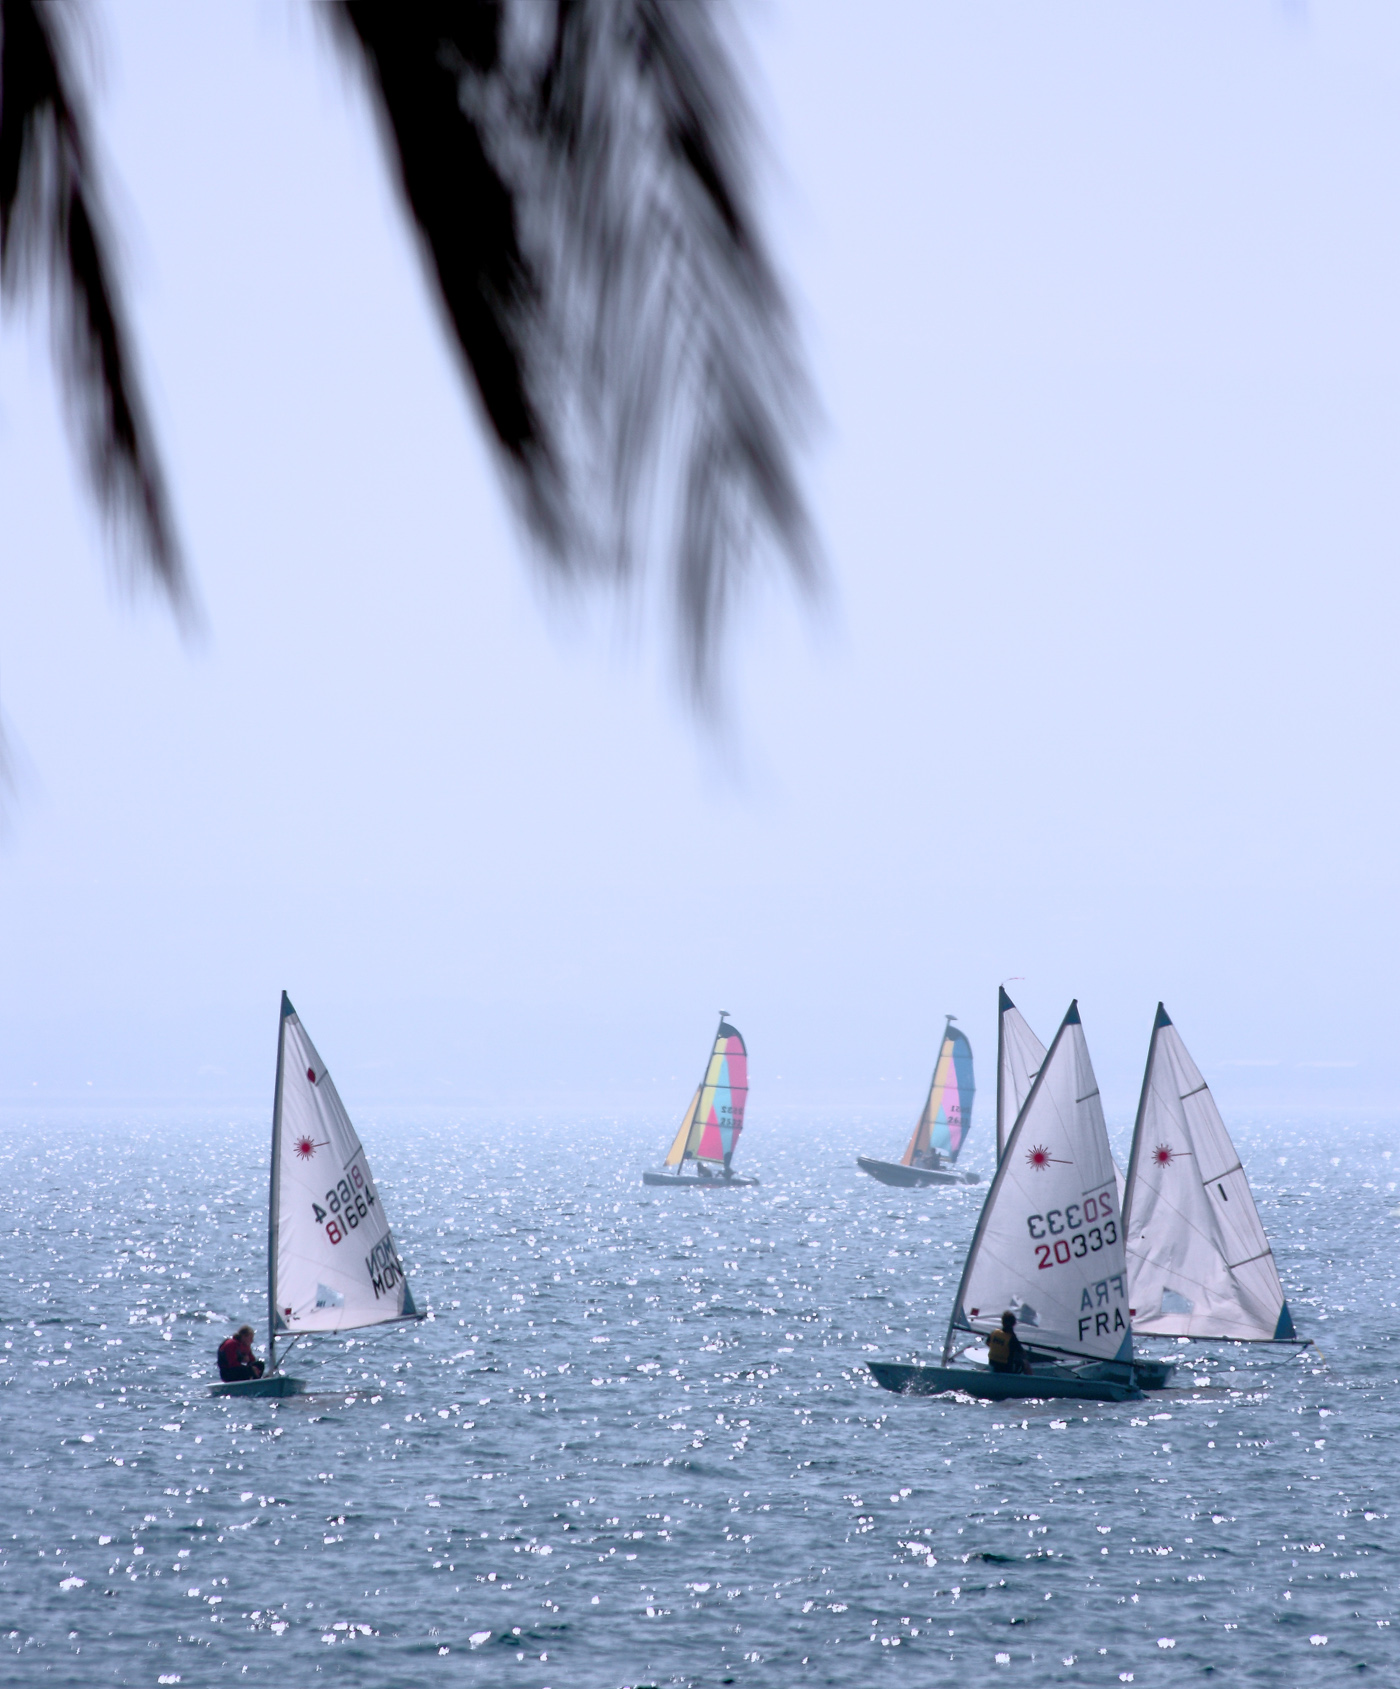 Best leisure activity - sailing race on the ocean photo